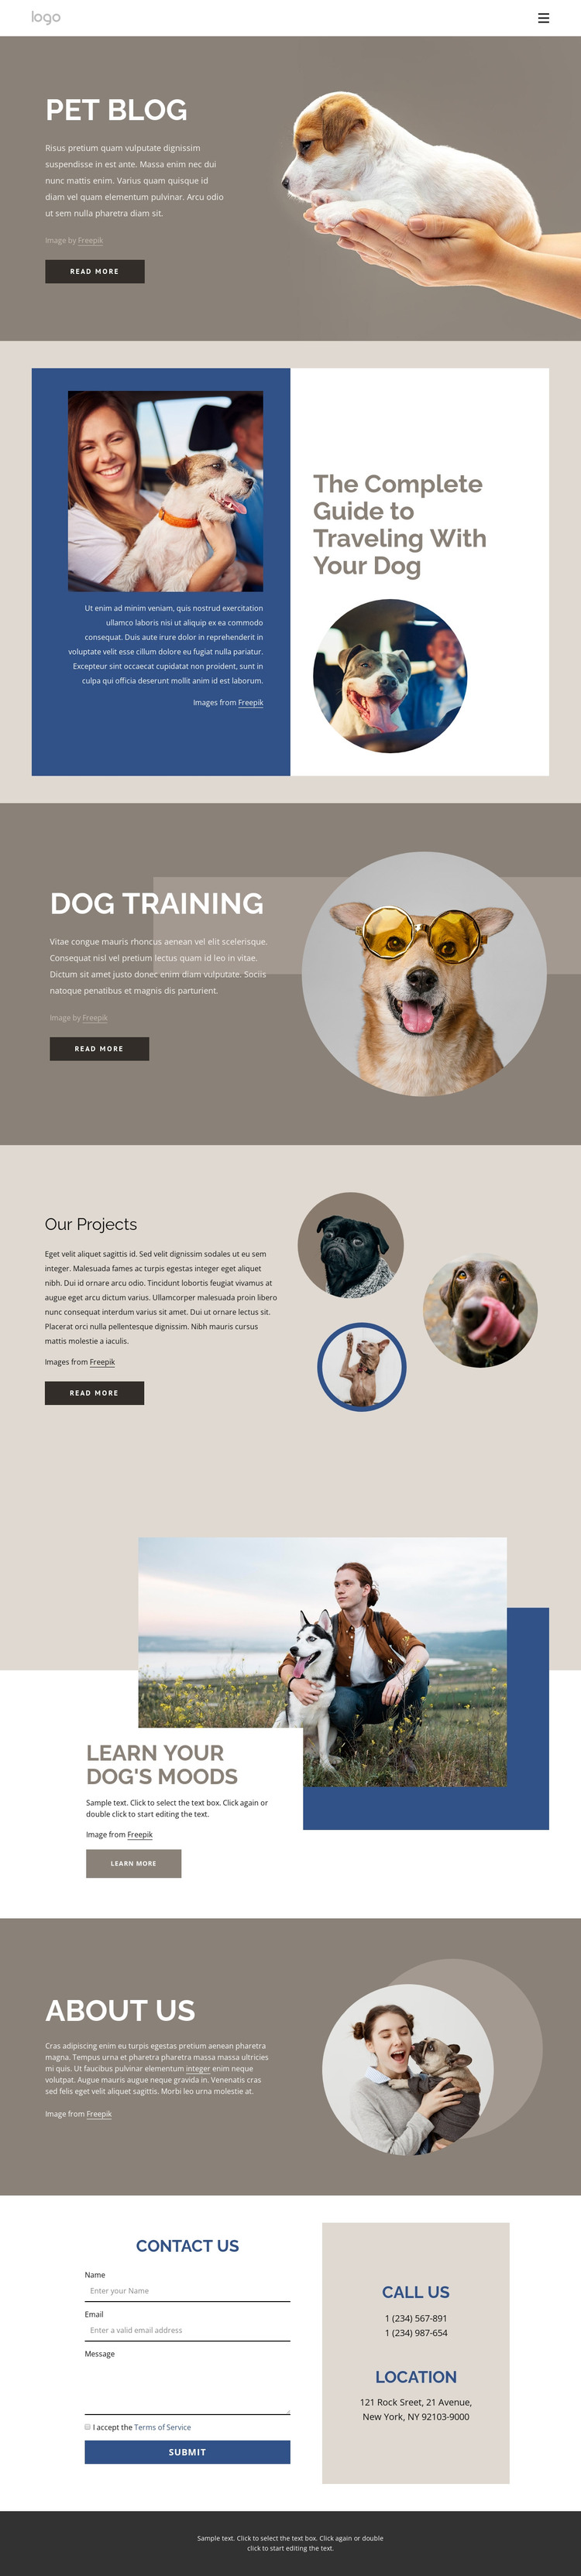 Pet Blog Web Design